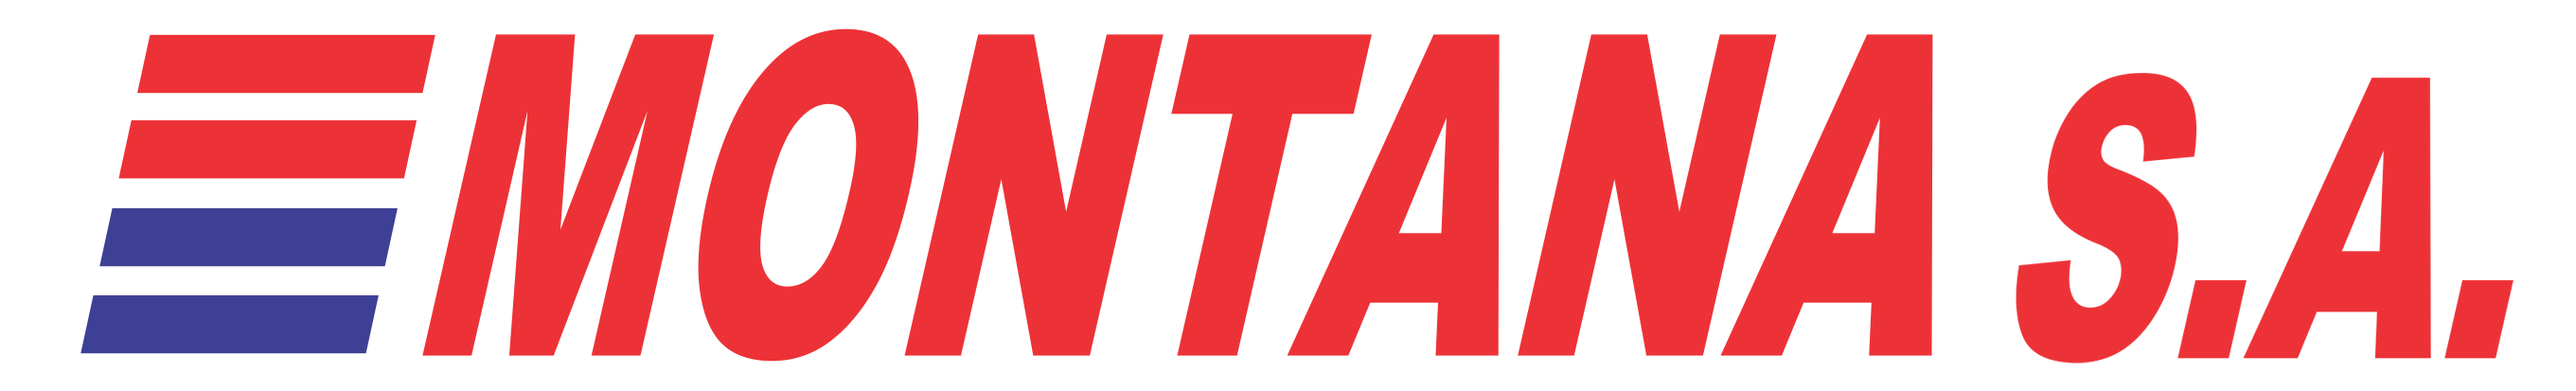 logo montana borde